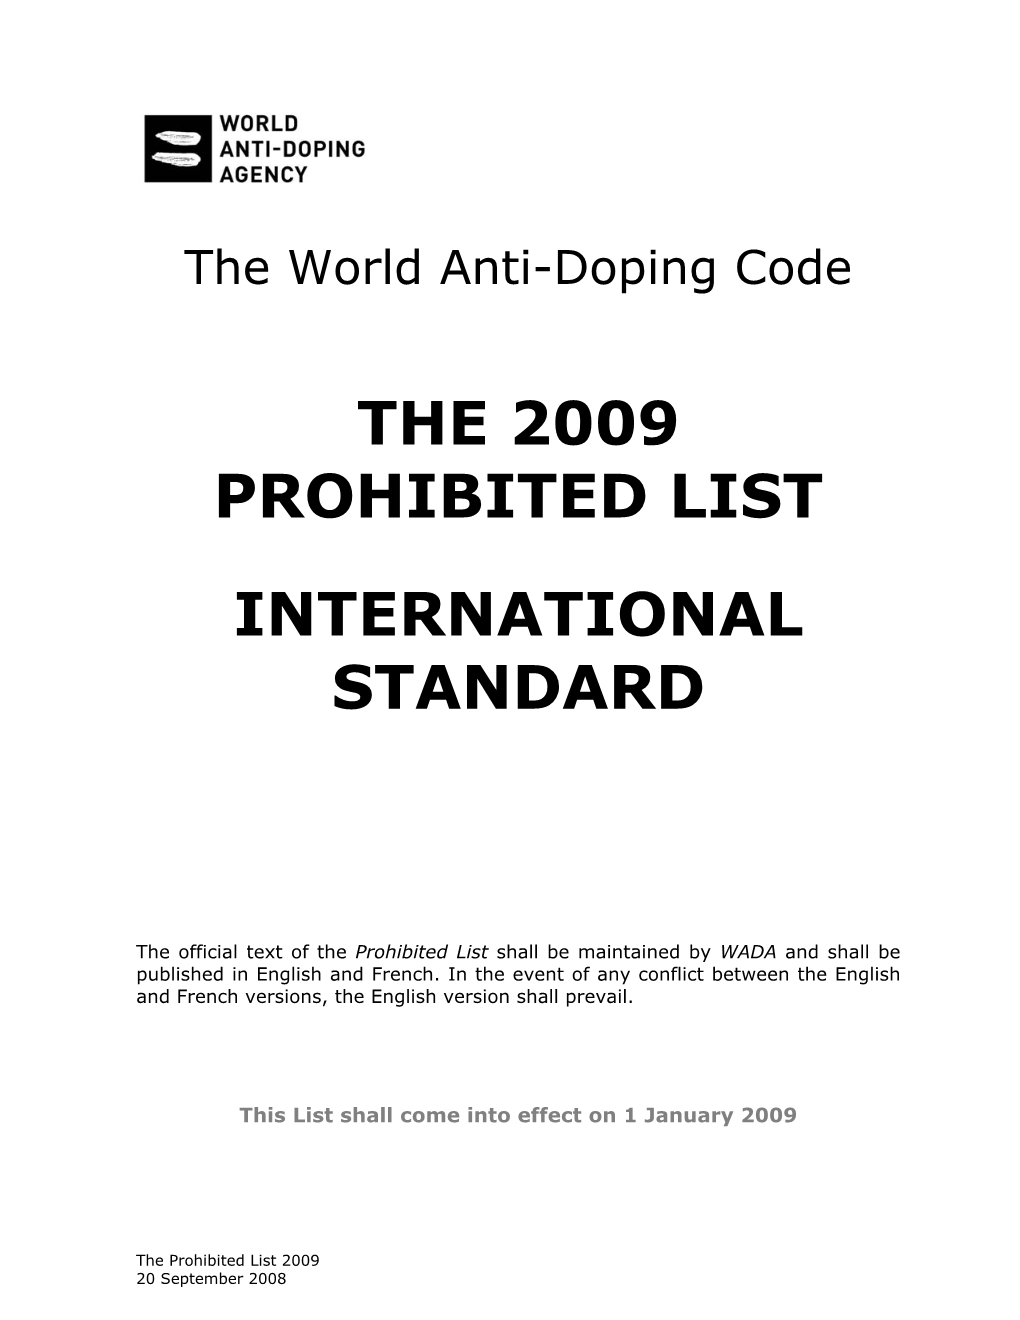 The 2009 Prohibited List International Standard